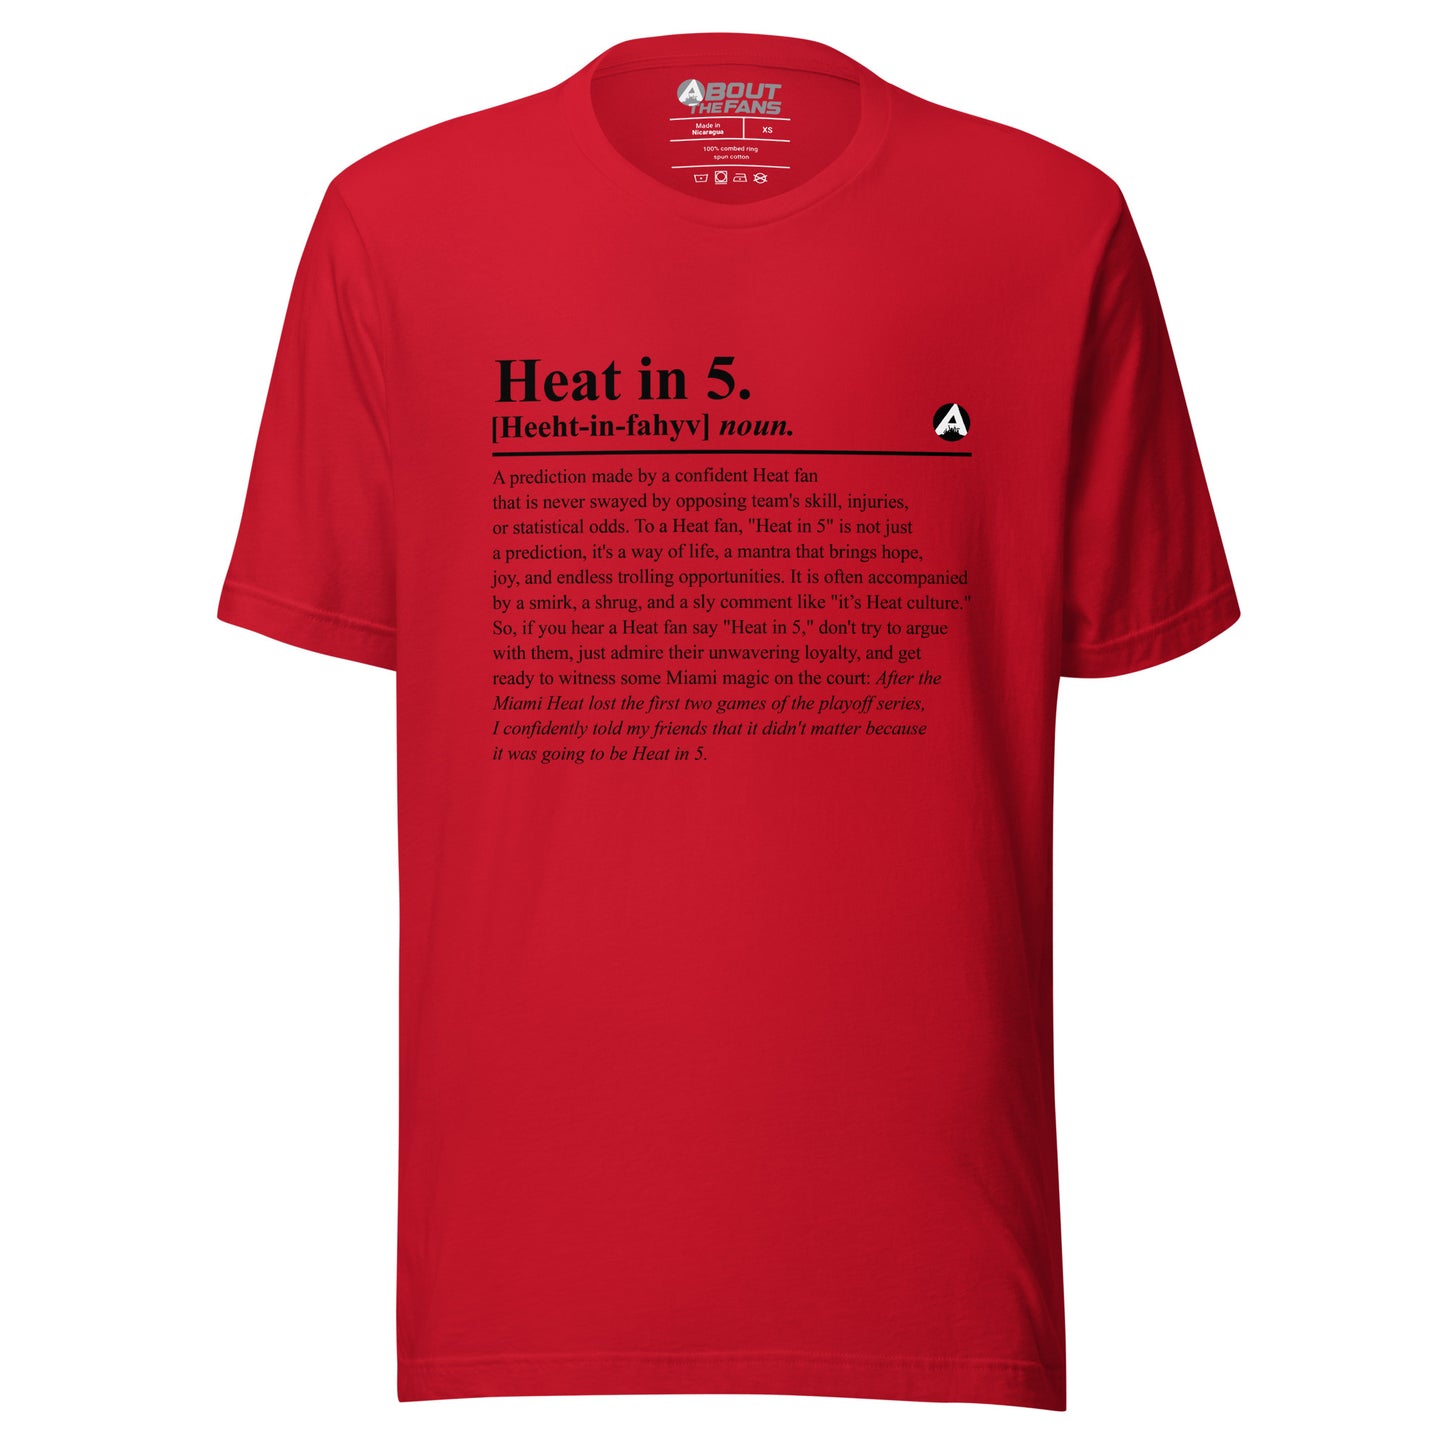 Heat in 5 Definition Shirt